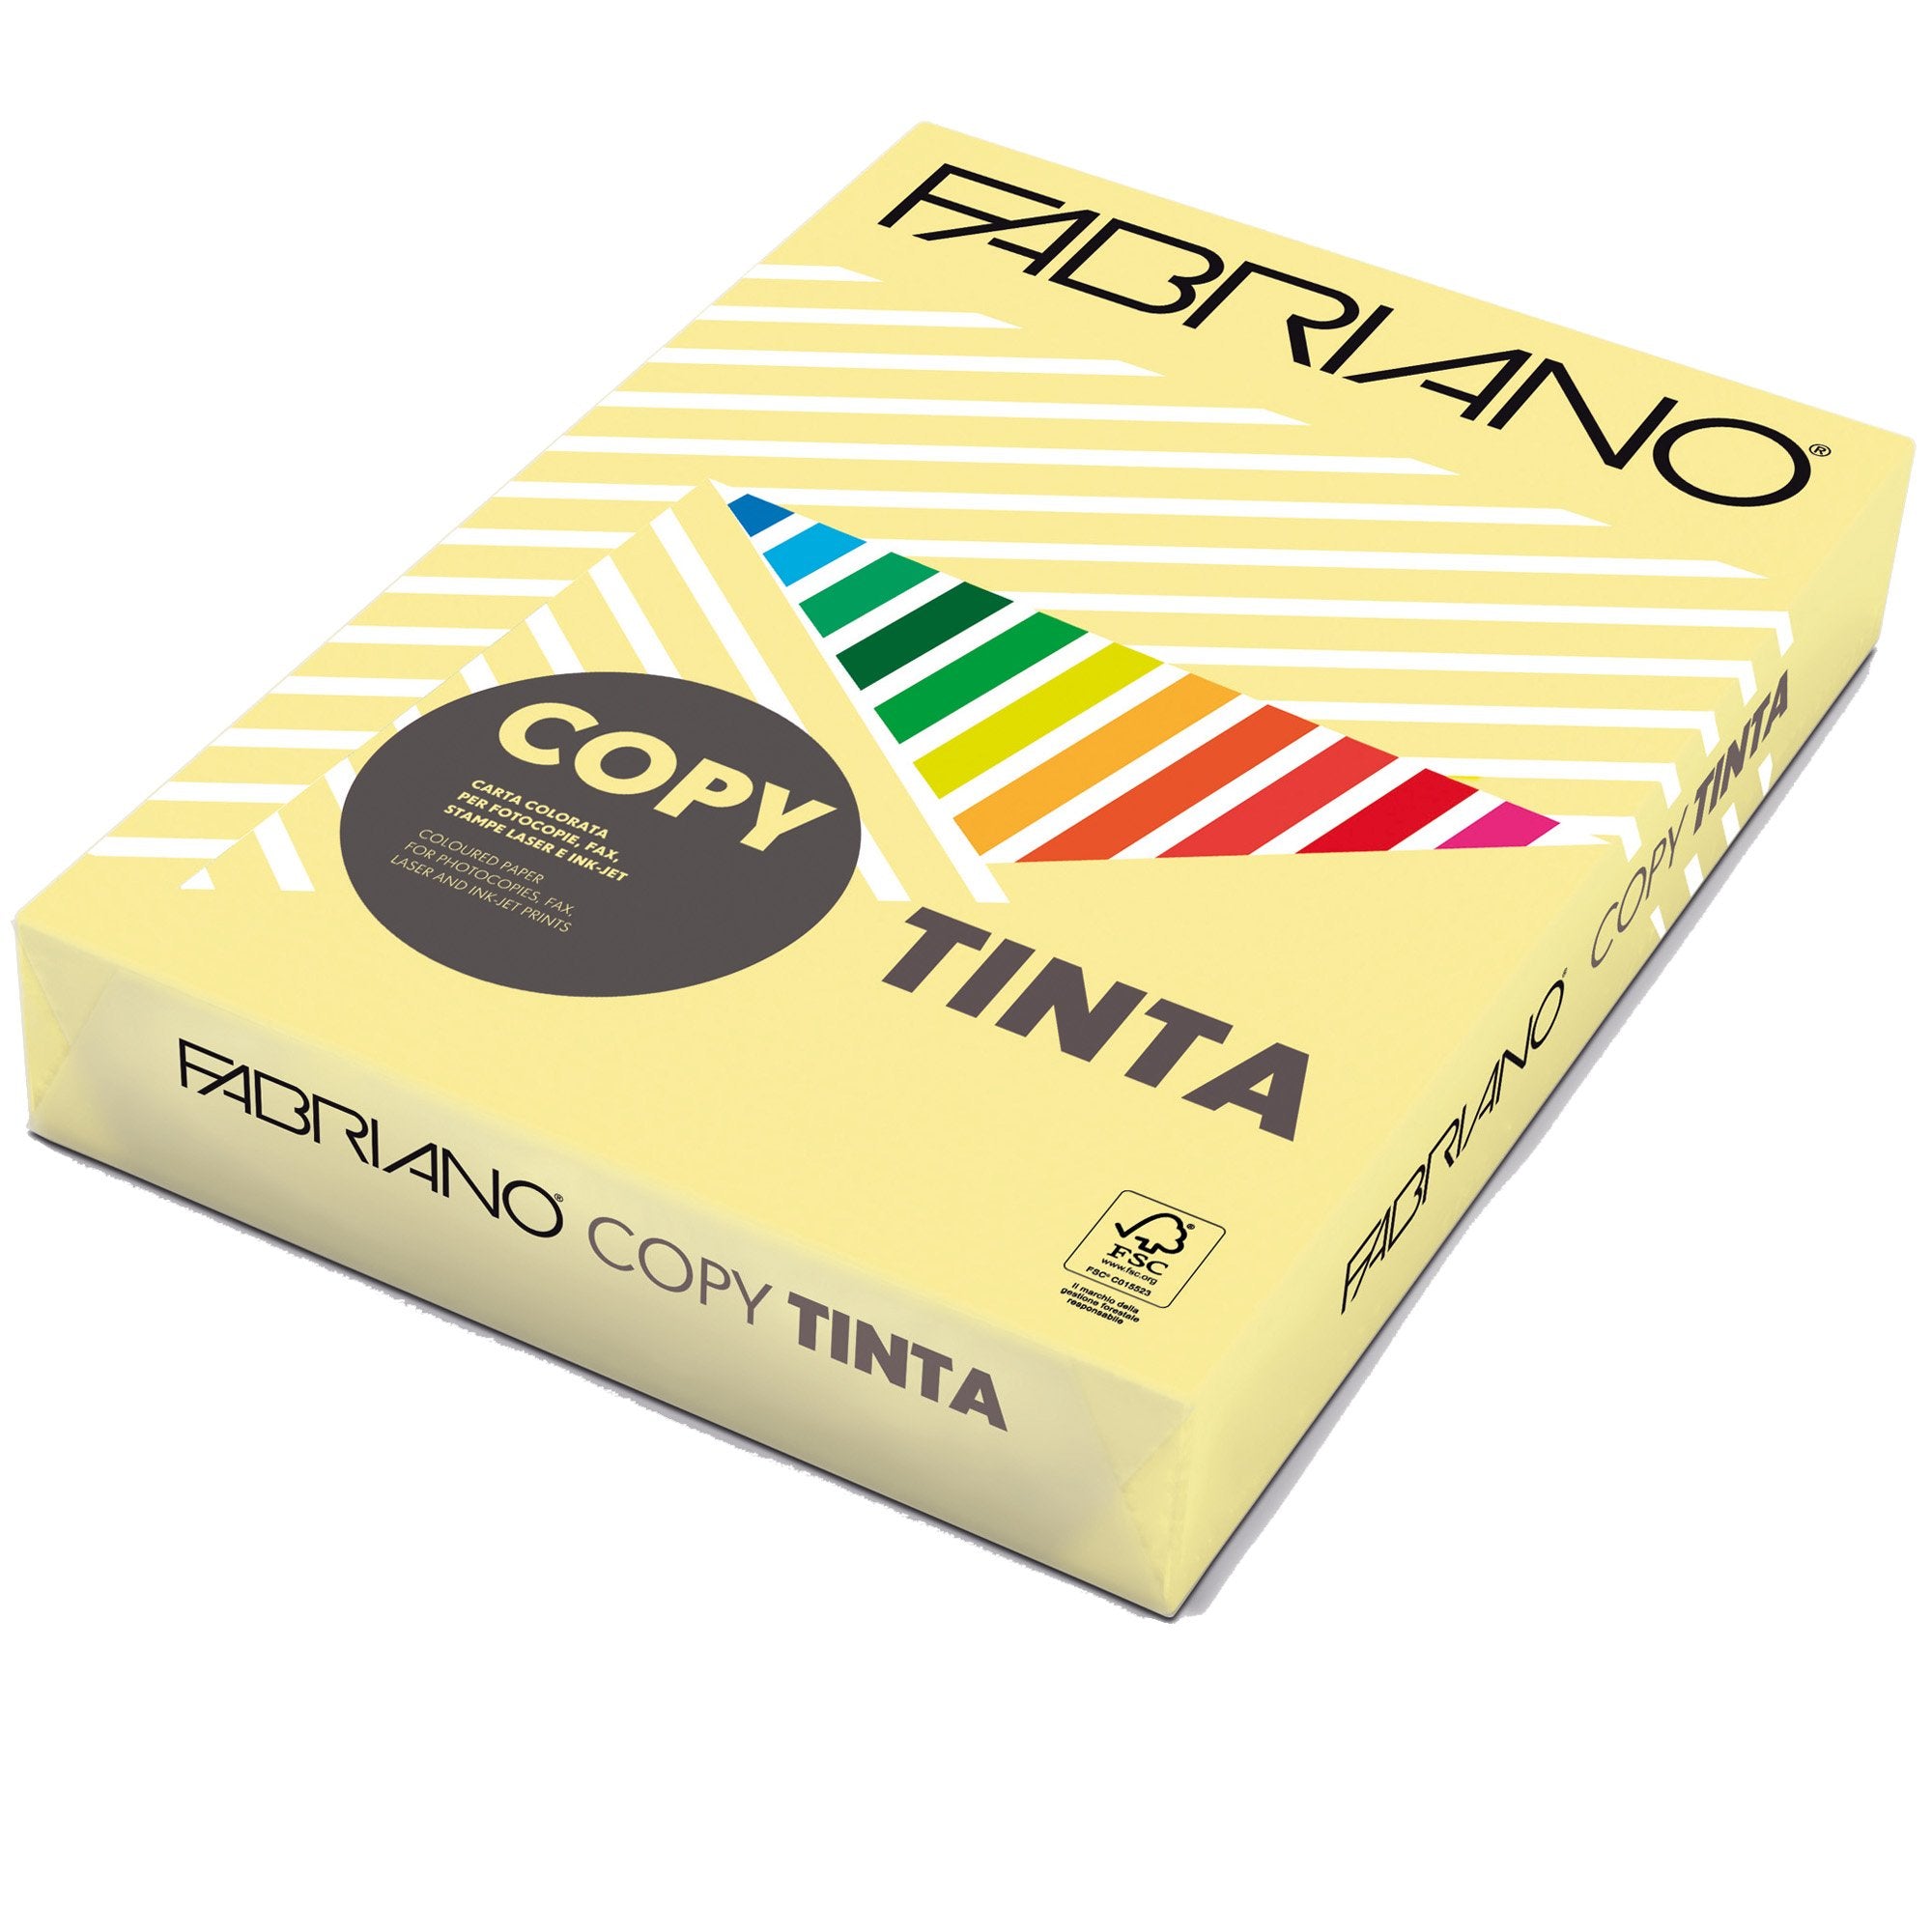 fabriano-carta-copy-tinta-a3-80gr-250fg-col-tenue-banana